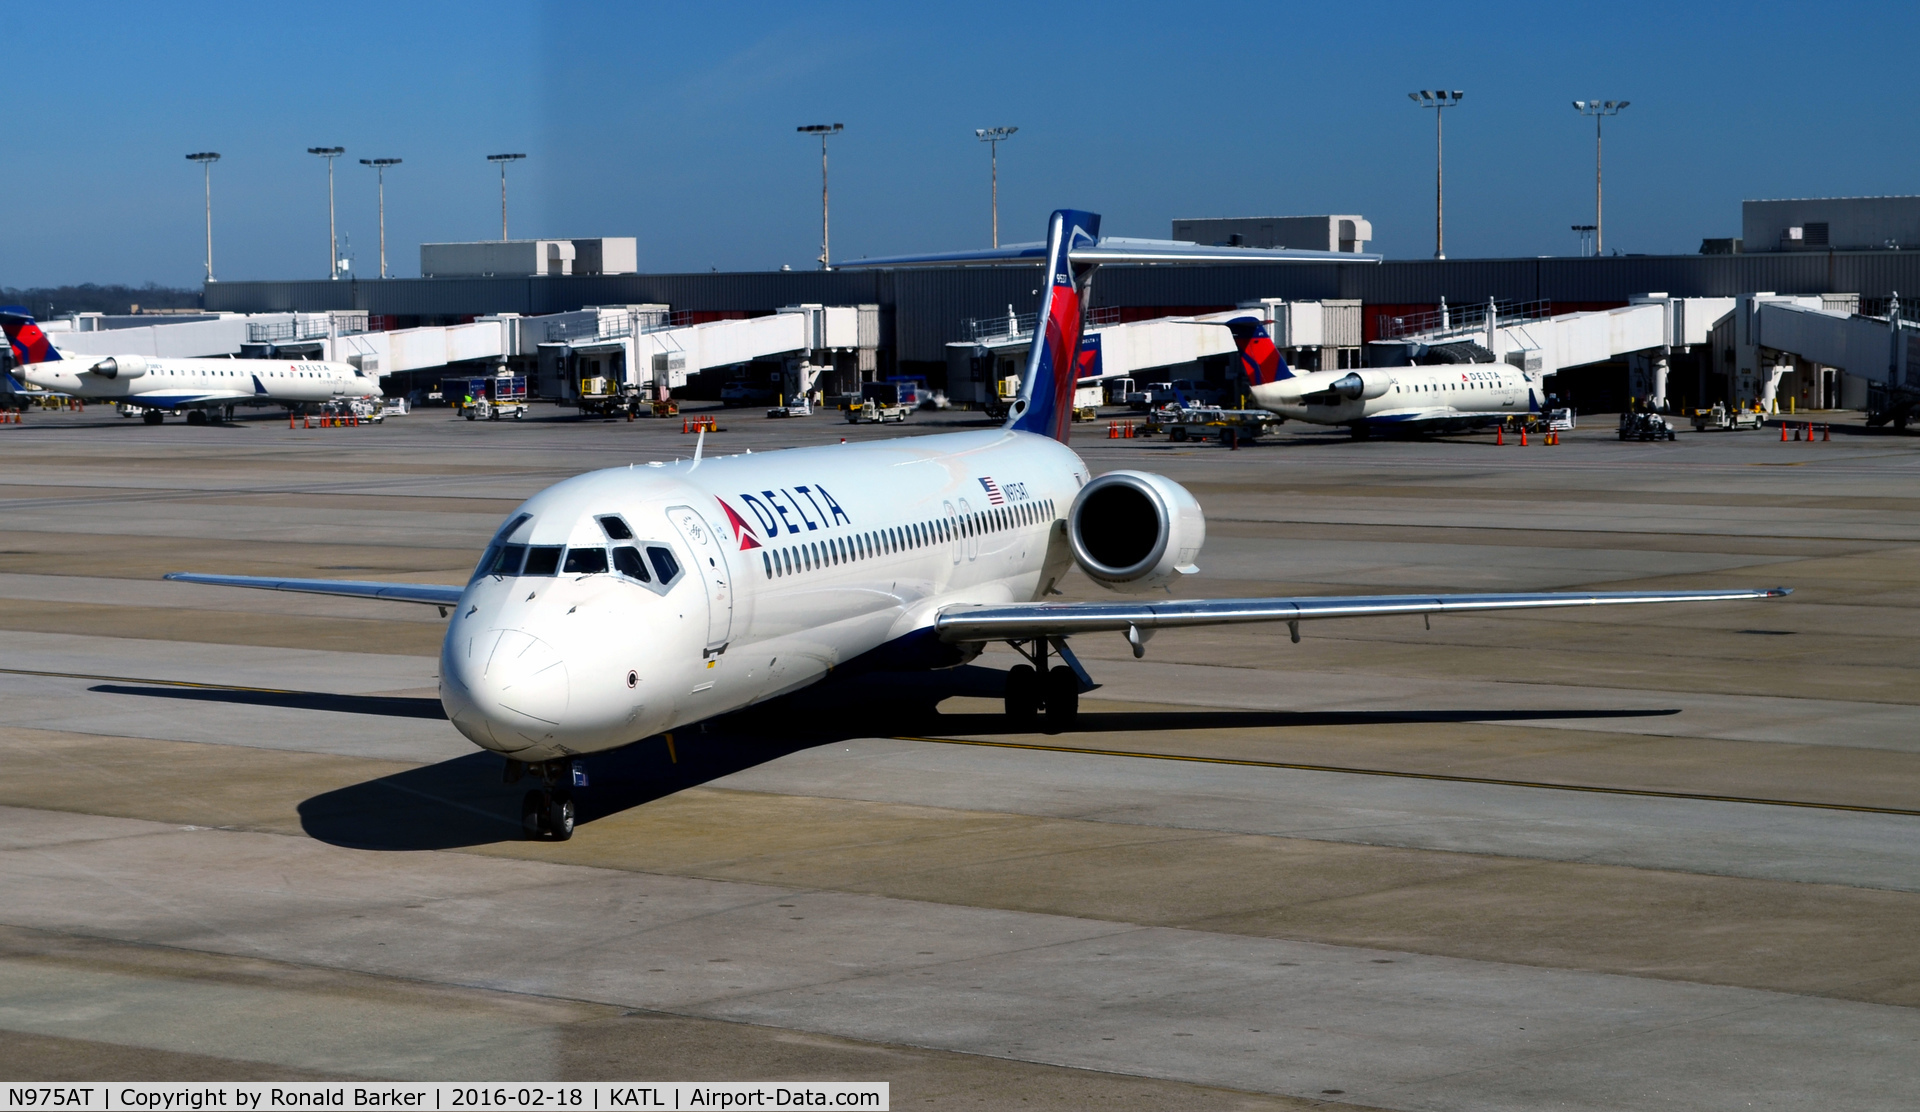 N975AT, 2002 Boeing 717-200 C/N 55035, Ready to taxi Atlanta